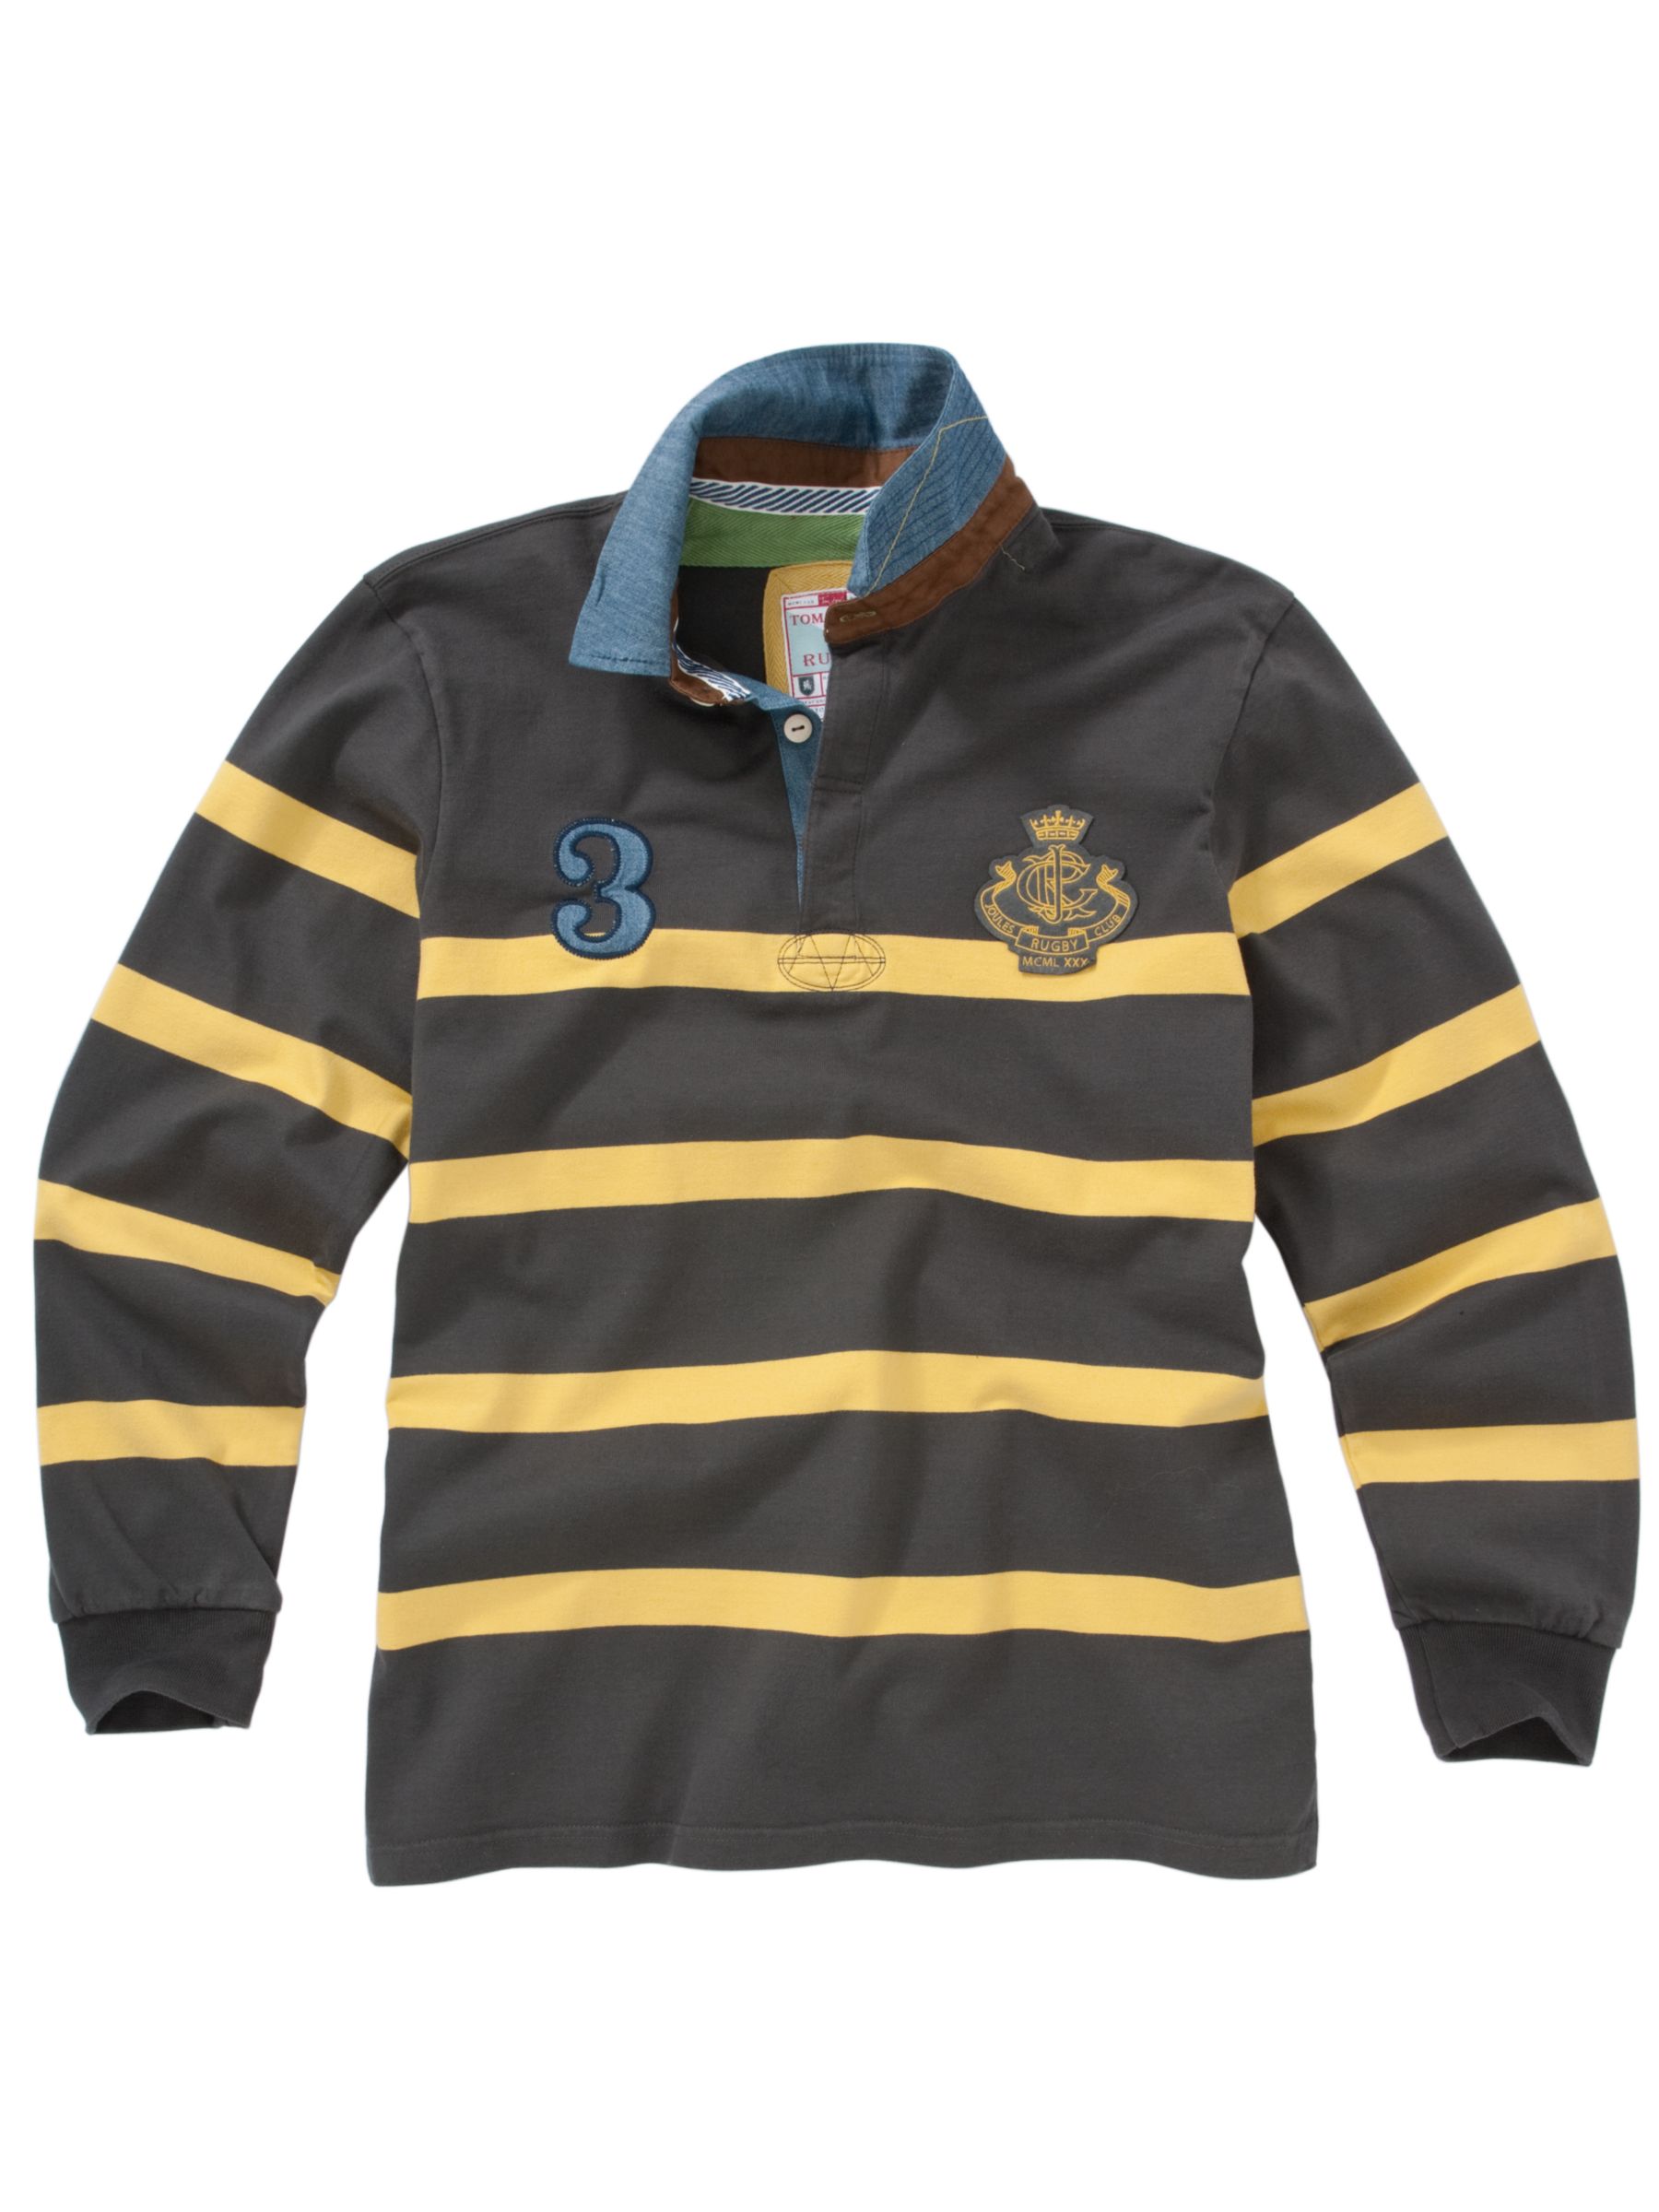 Stamford Stripe Rugby Shirt, Cream